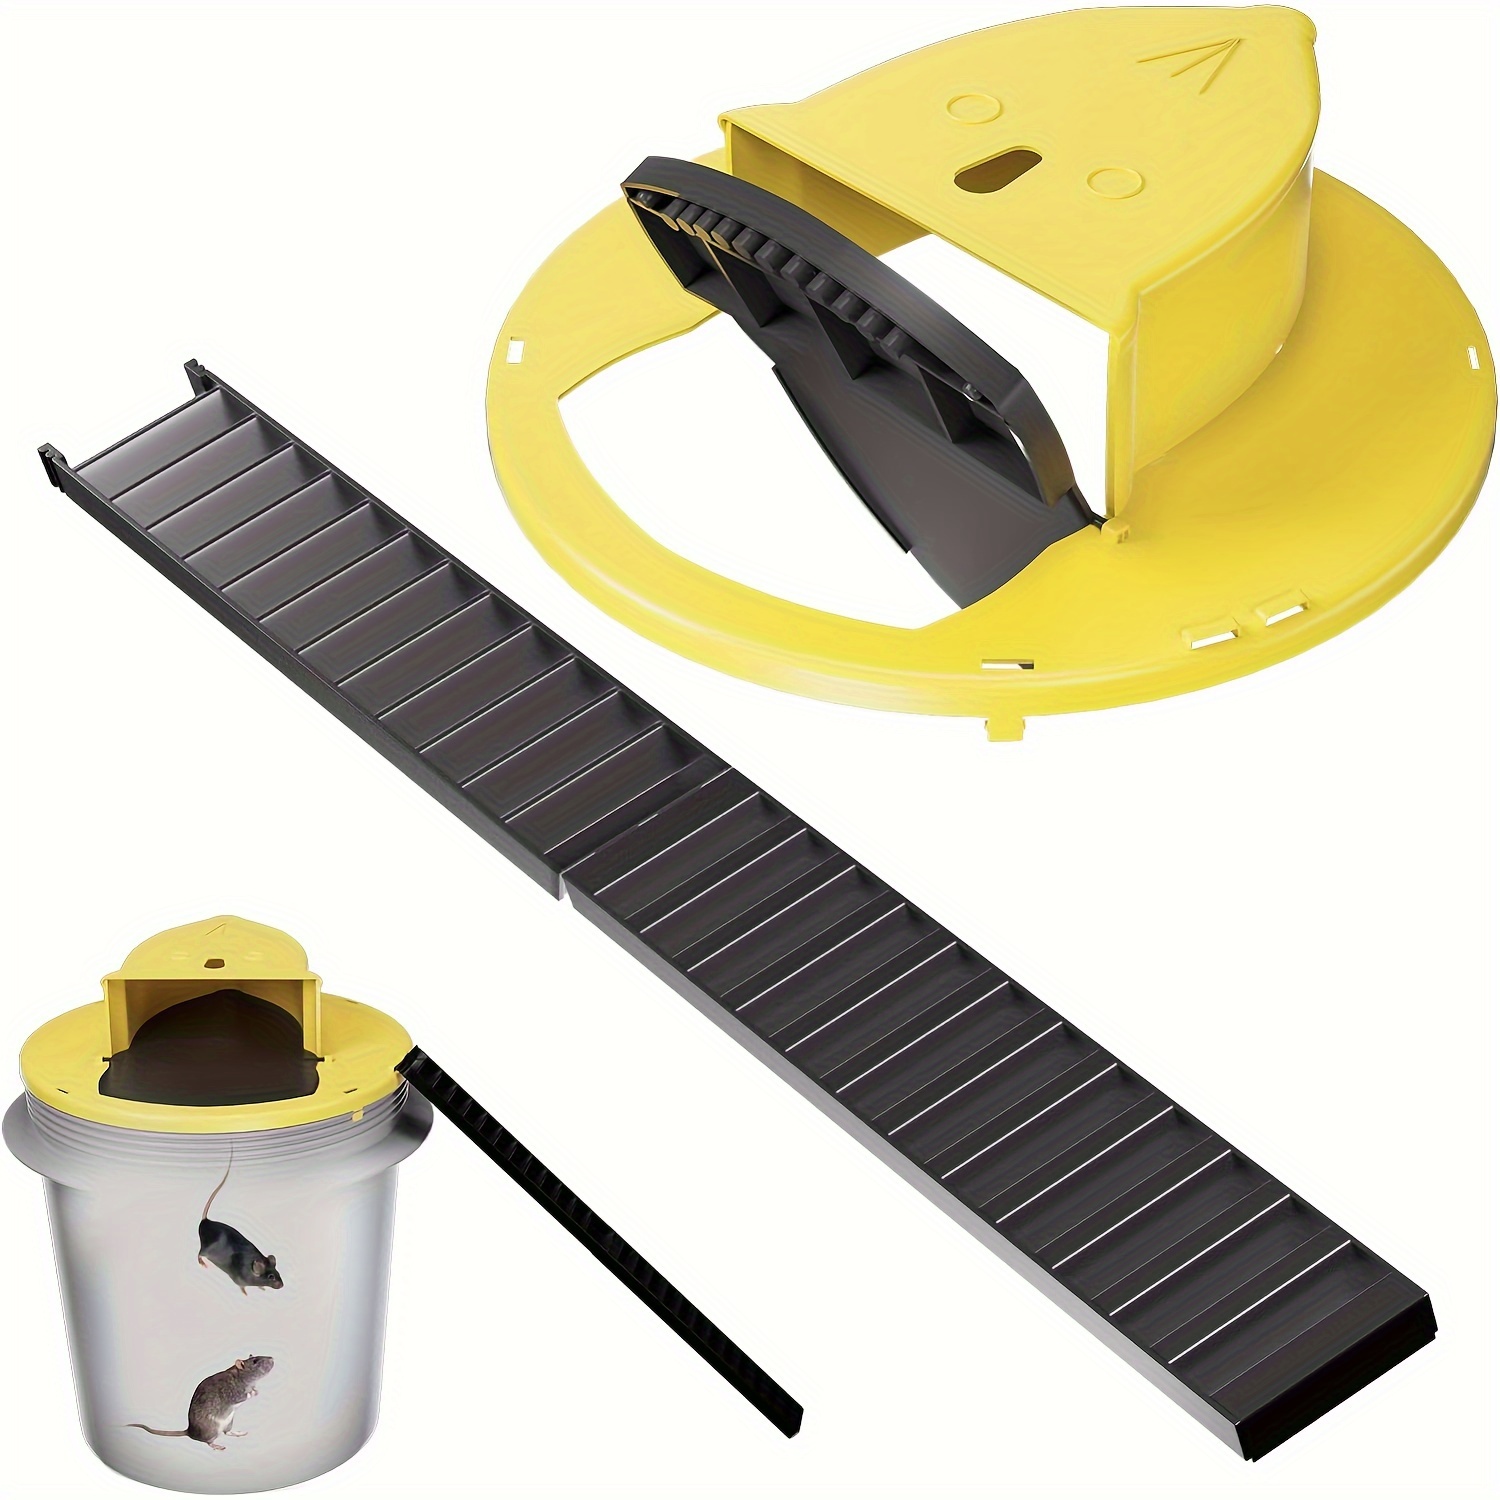 Second Generation, Flip N Slide Bucket Lid Mouse Trap - Indoor Outdoor, 5 Gallon Bucket Compatible, Multi Catch, Auto Reset, Slide Bucket Lid Mouse